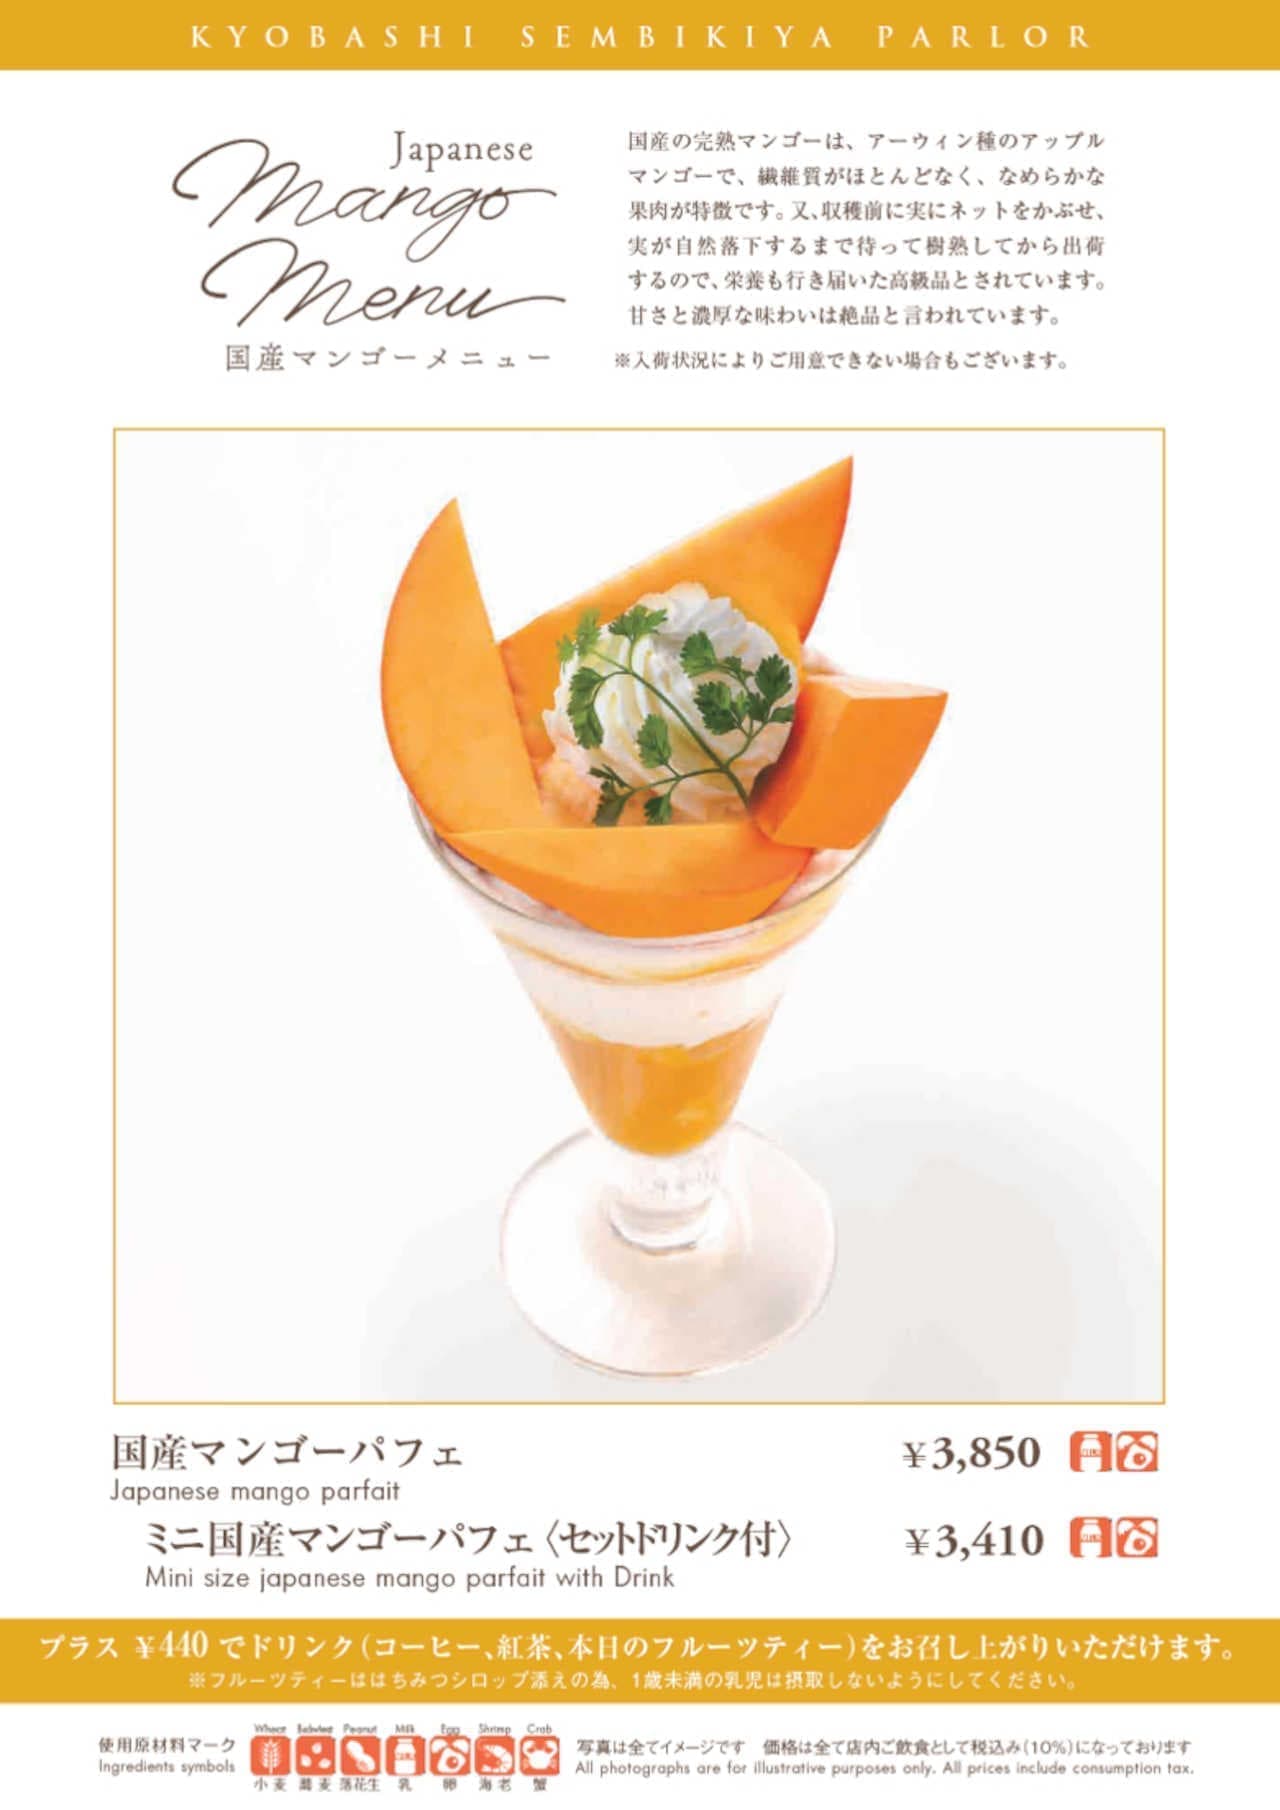 Kyobashi Sembikiya "Domestic Mango Parfait" and "Mini Domestic Mango [with set drink]".